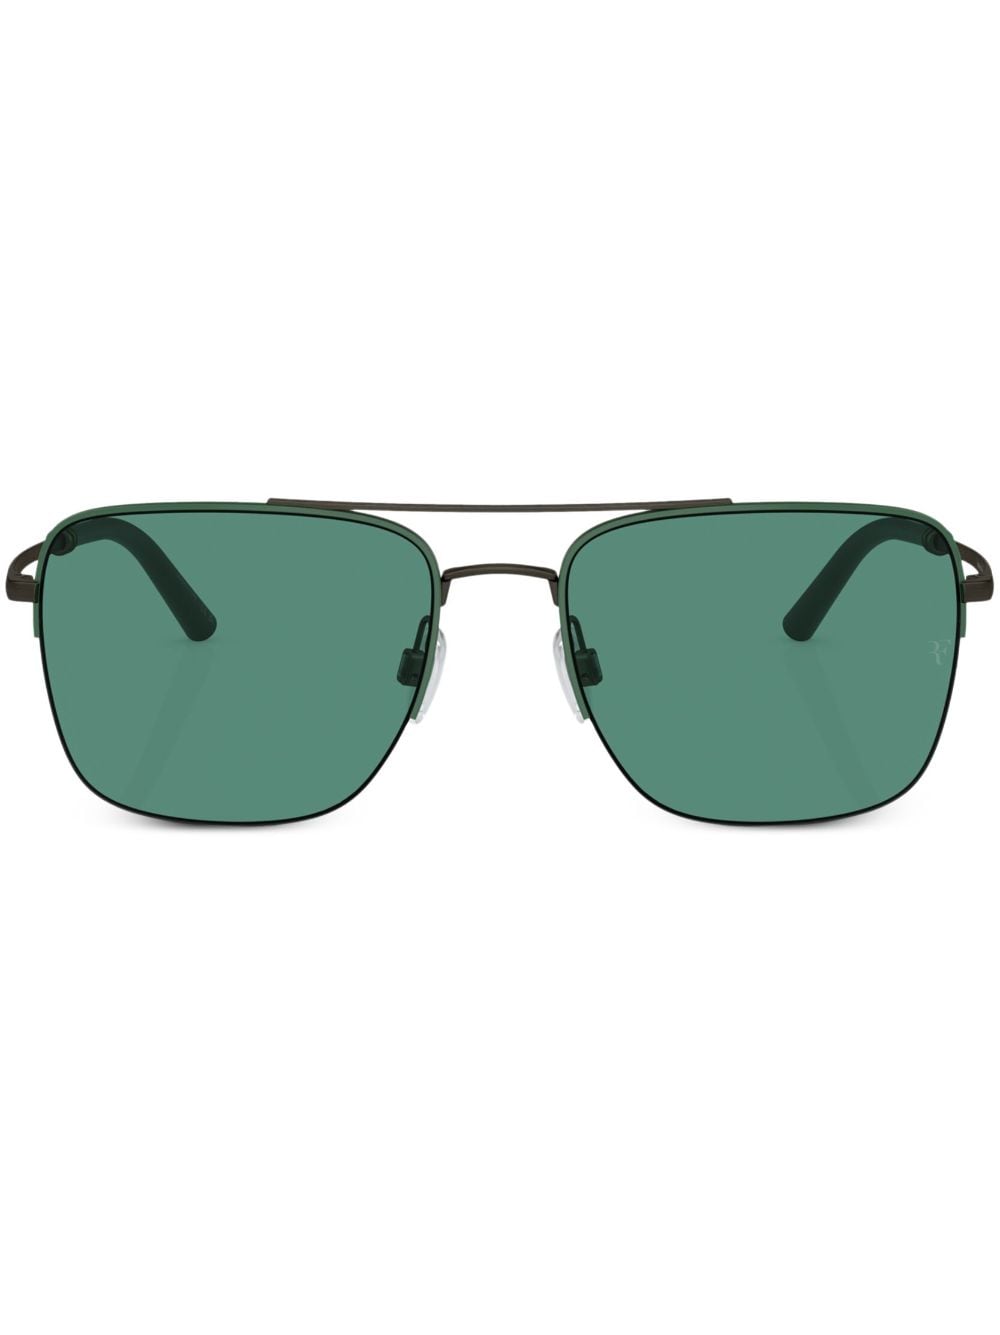 Oliver Peoples R-2 square-frame sunglasses - Green von Oliver Peoples